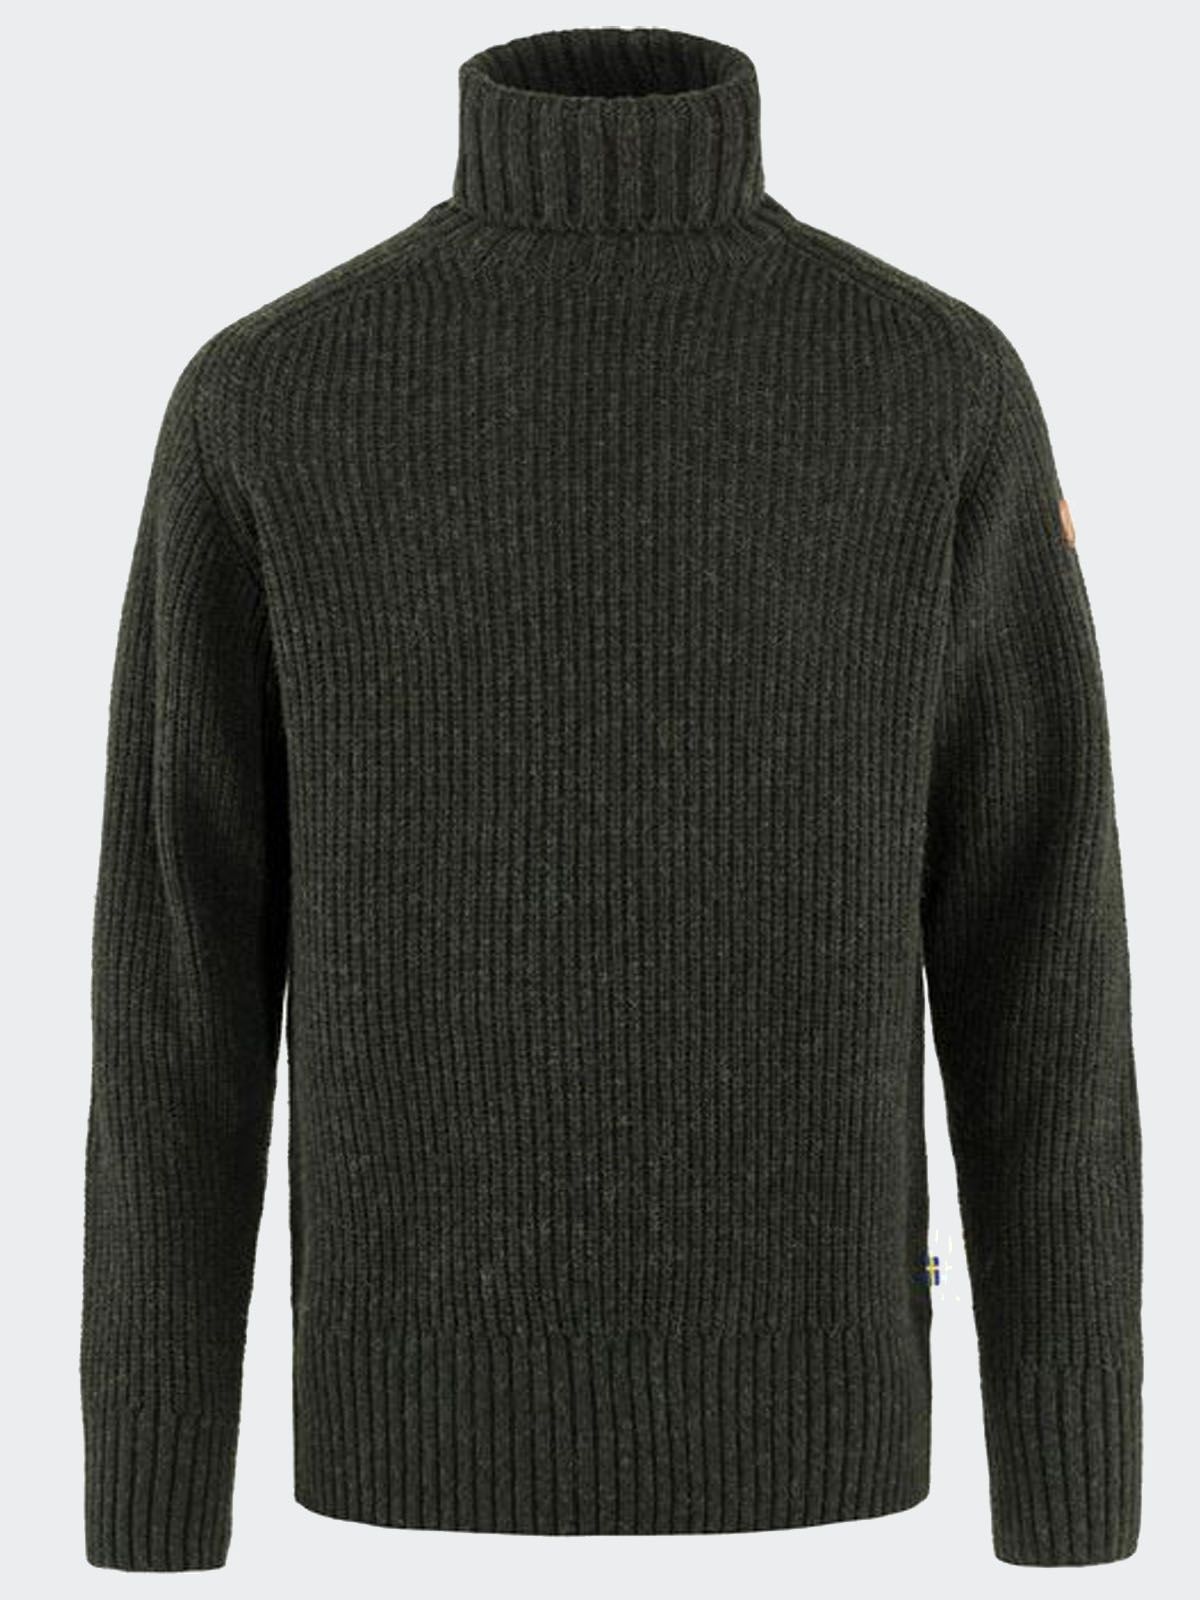 Buy Product : Fjallraven Men's Ovik Roller Neck Sweater in Dark Olive